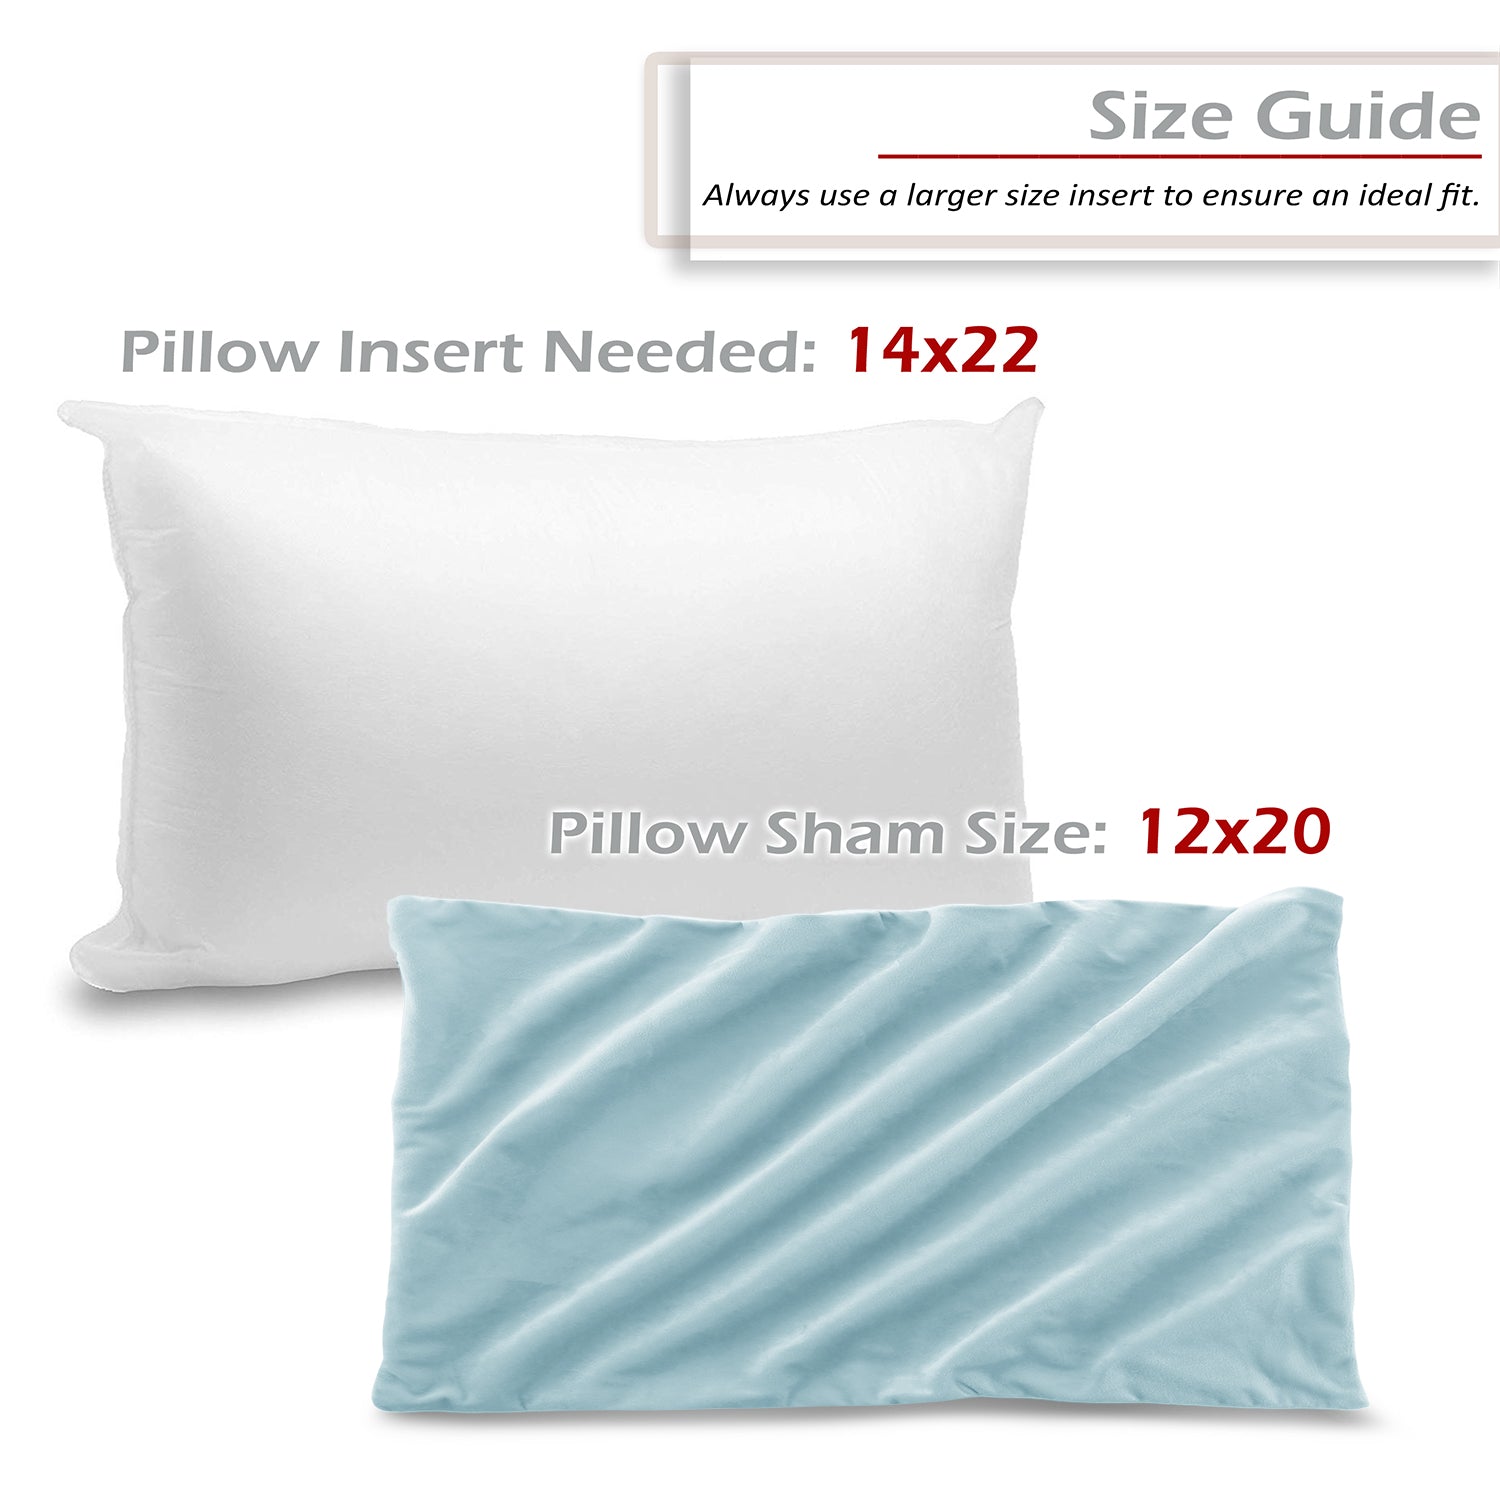 Nestl Throw Pillows for Couch, 16x16 Pillow Inserts, Soft Throw Pillow, Lightweight 16x16 Pillow, Machine Washable Sofa Pillows, White Throw Pillows